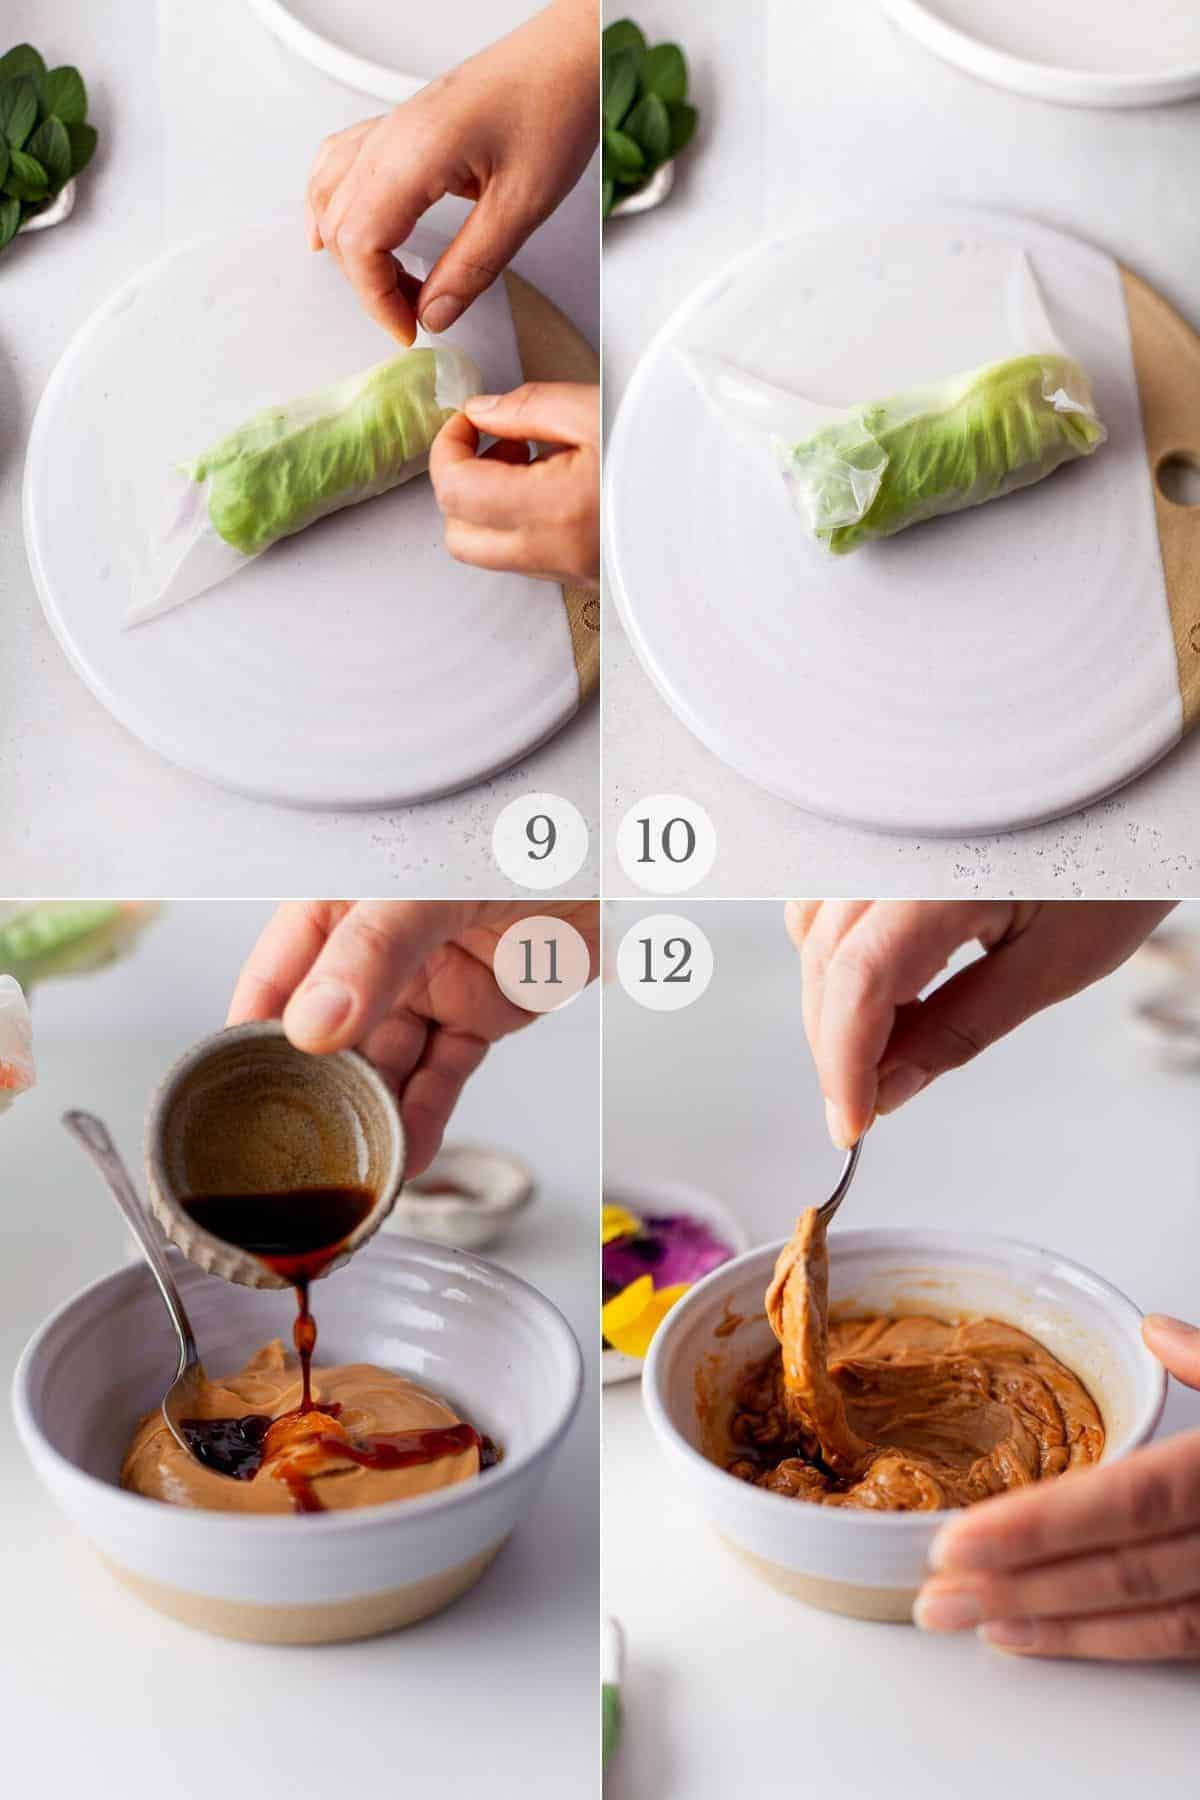 how to make fresh spring rolls recipe steps 9-12